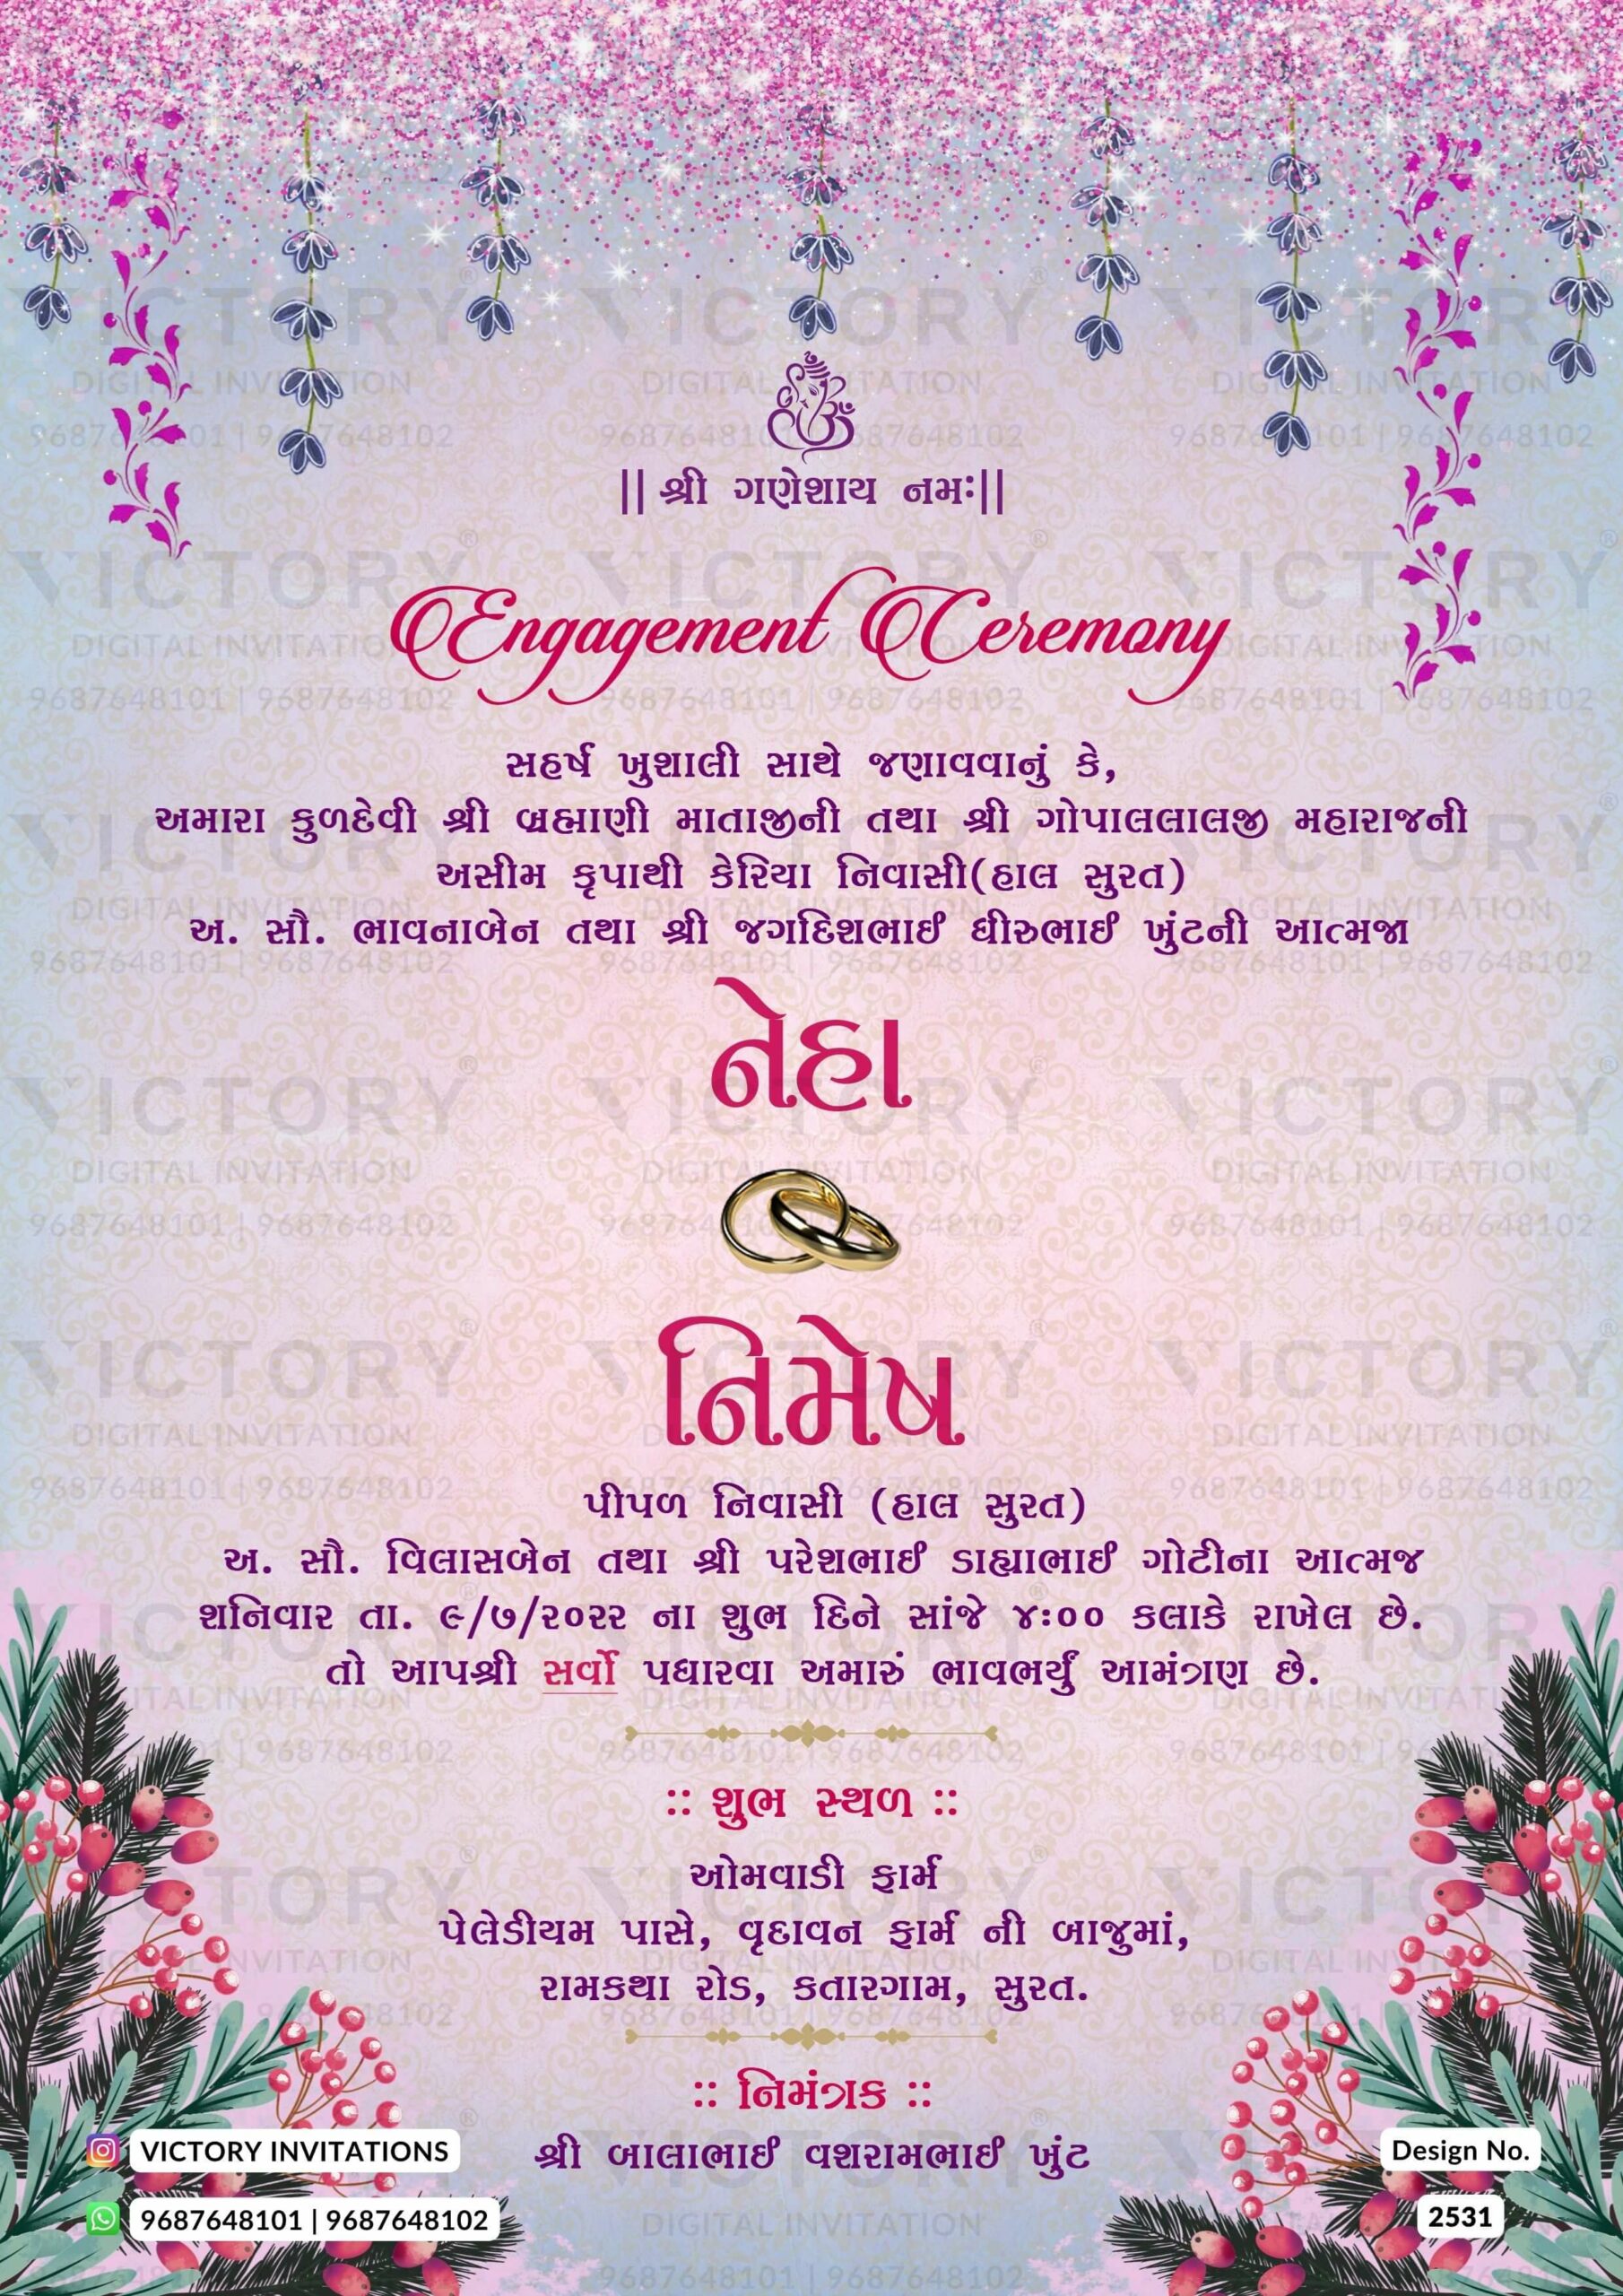 pink flowers theme digital engagement invitation card in Gujarati language design 2531